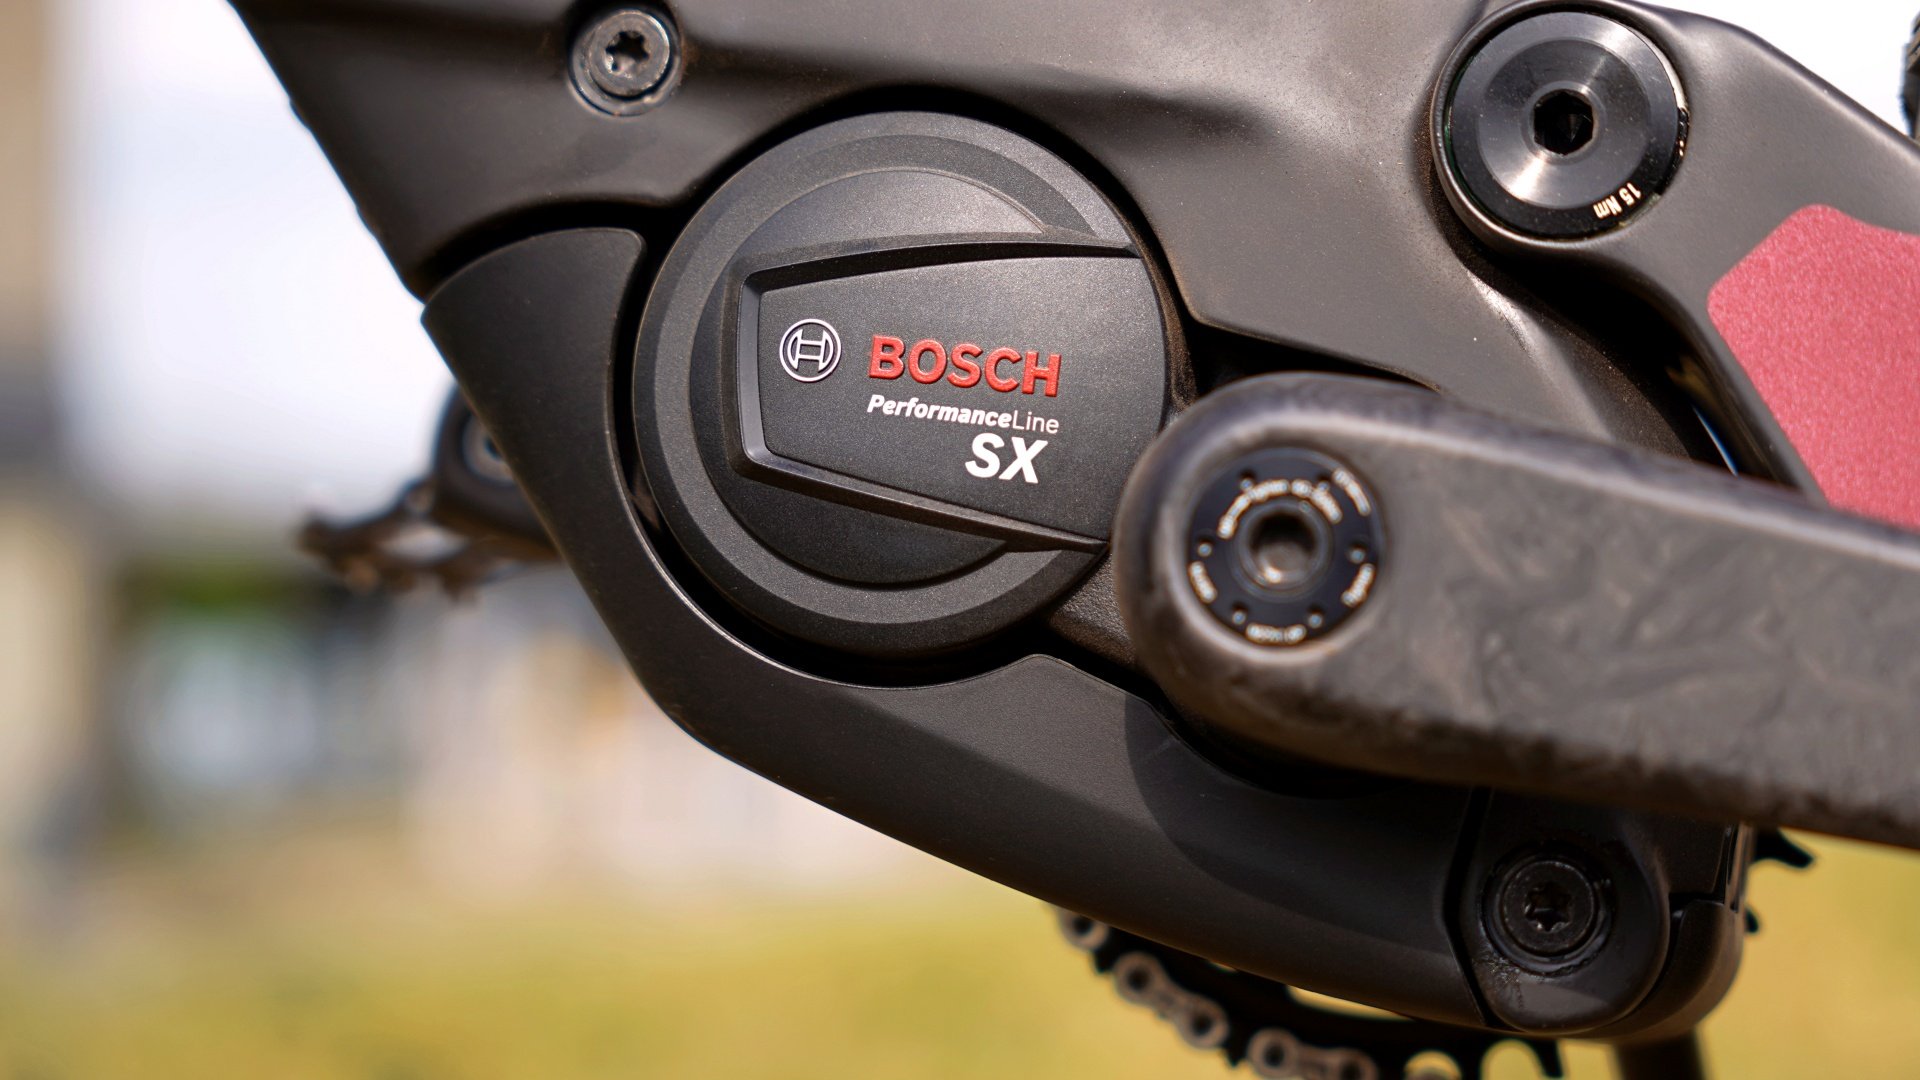 Bosch Performance SX first ride review